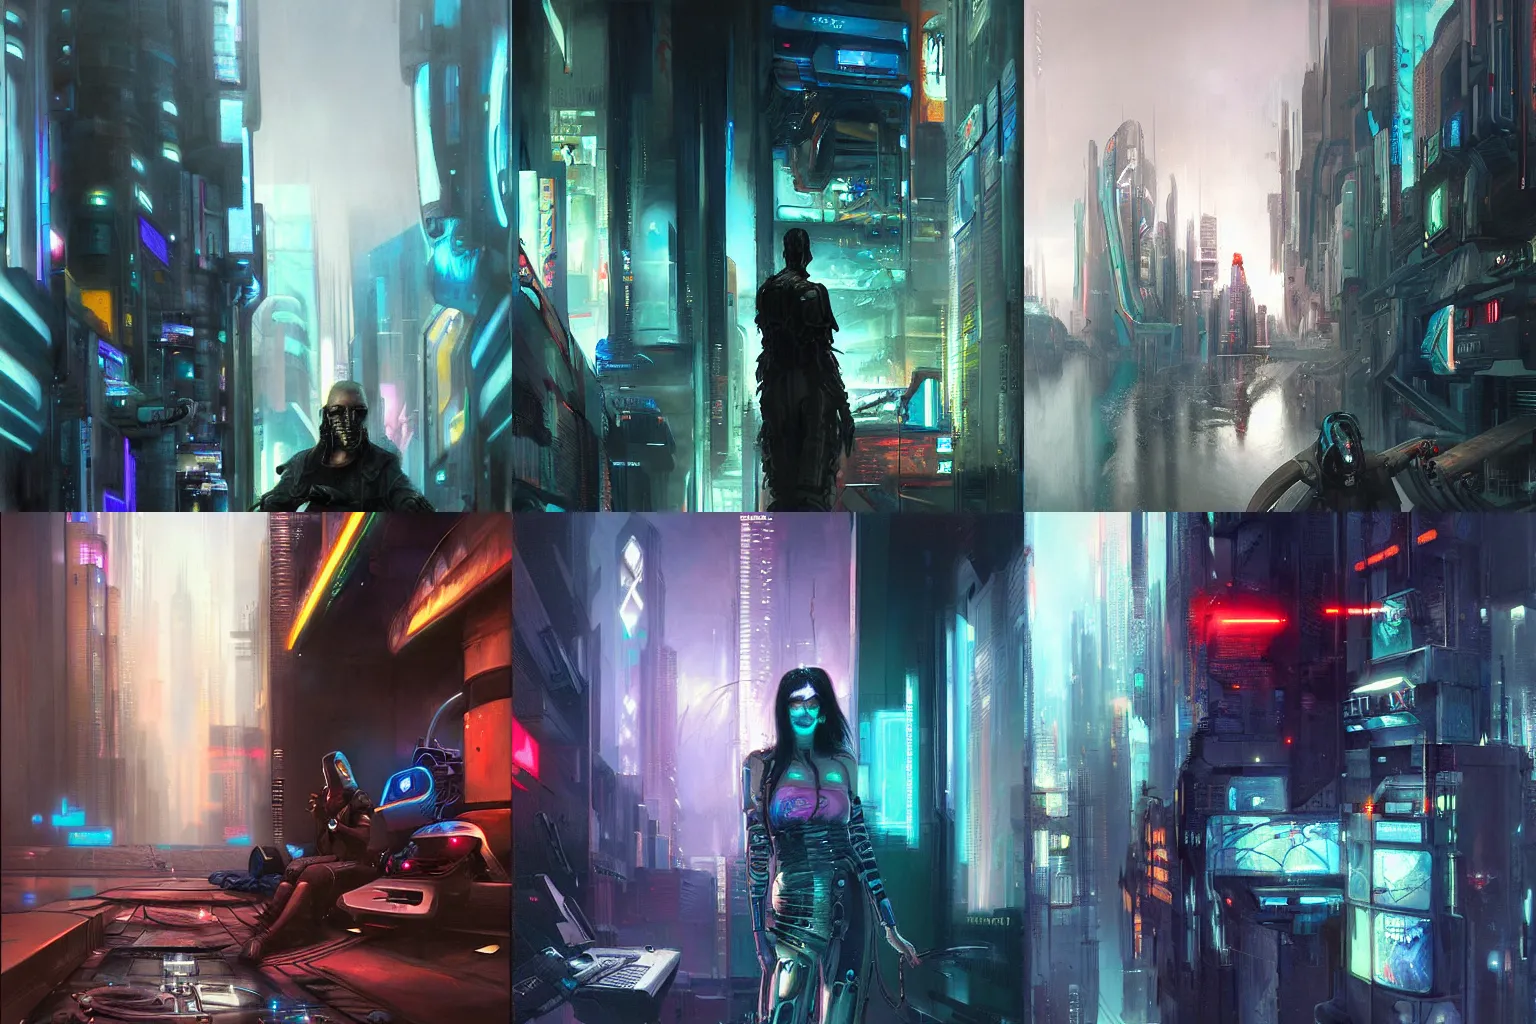 Prompt: Cyberpunk, painting by Jaime Jones